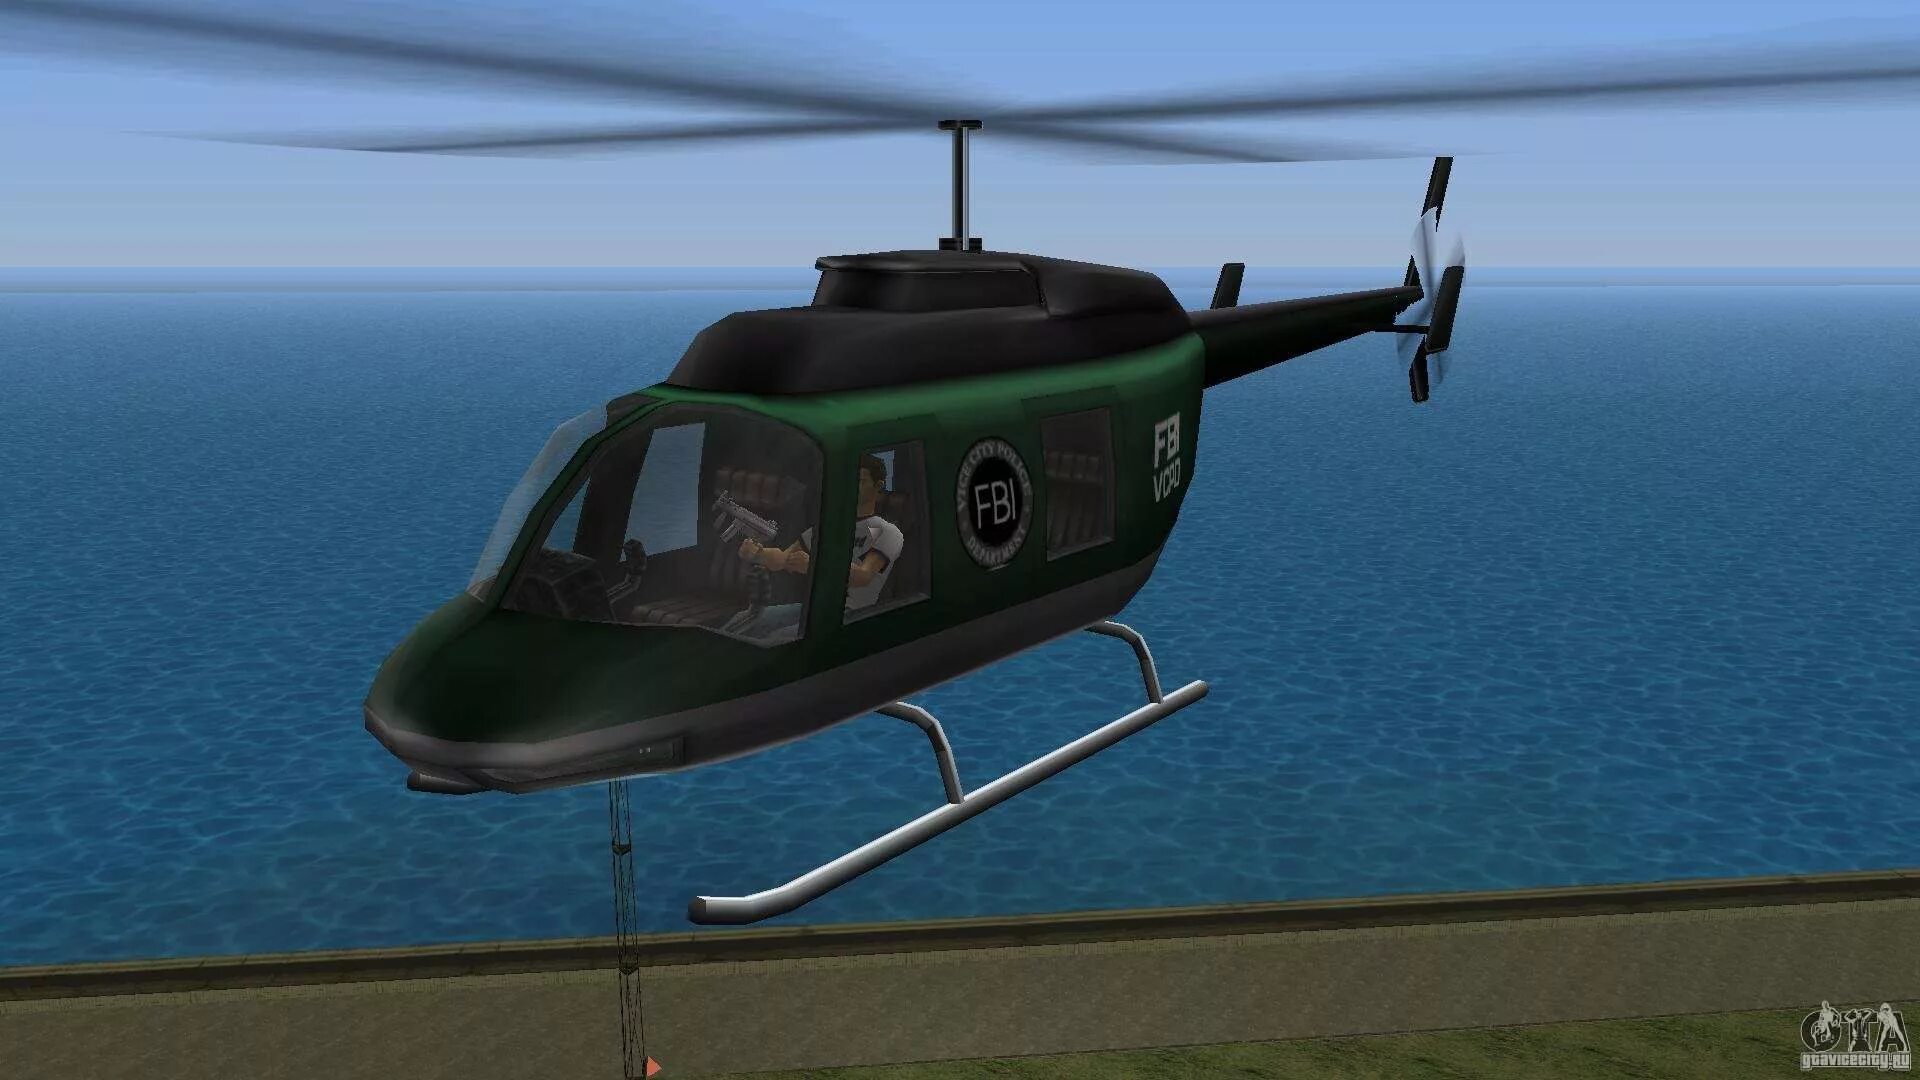 Гта вайс сити вертолет. Вертолет Маверик GTA vice City. Maverick вертолет в ГТА. Маверки вертолет в ГТА.